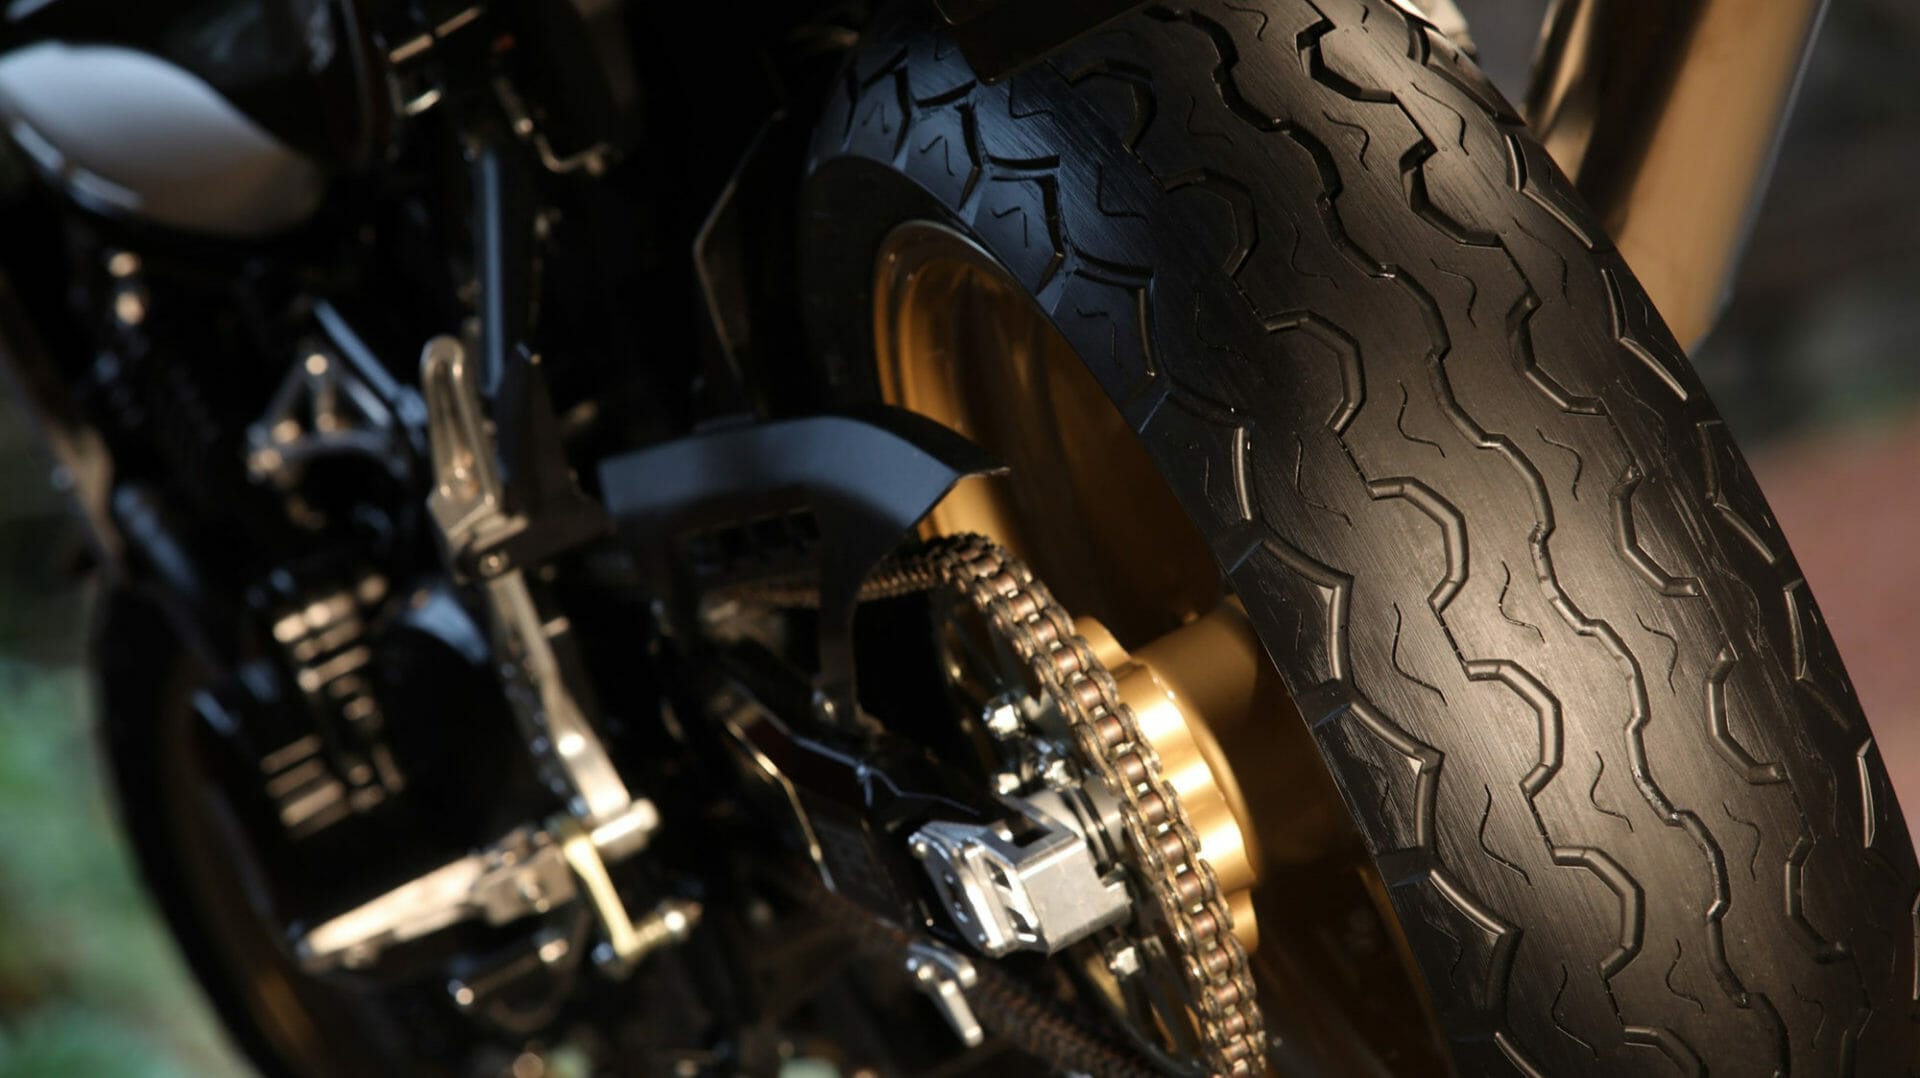 Neuer Dunlop Retro-Reifen bei der ClassicTT